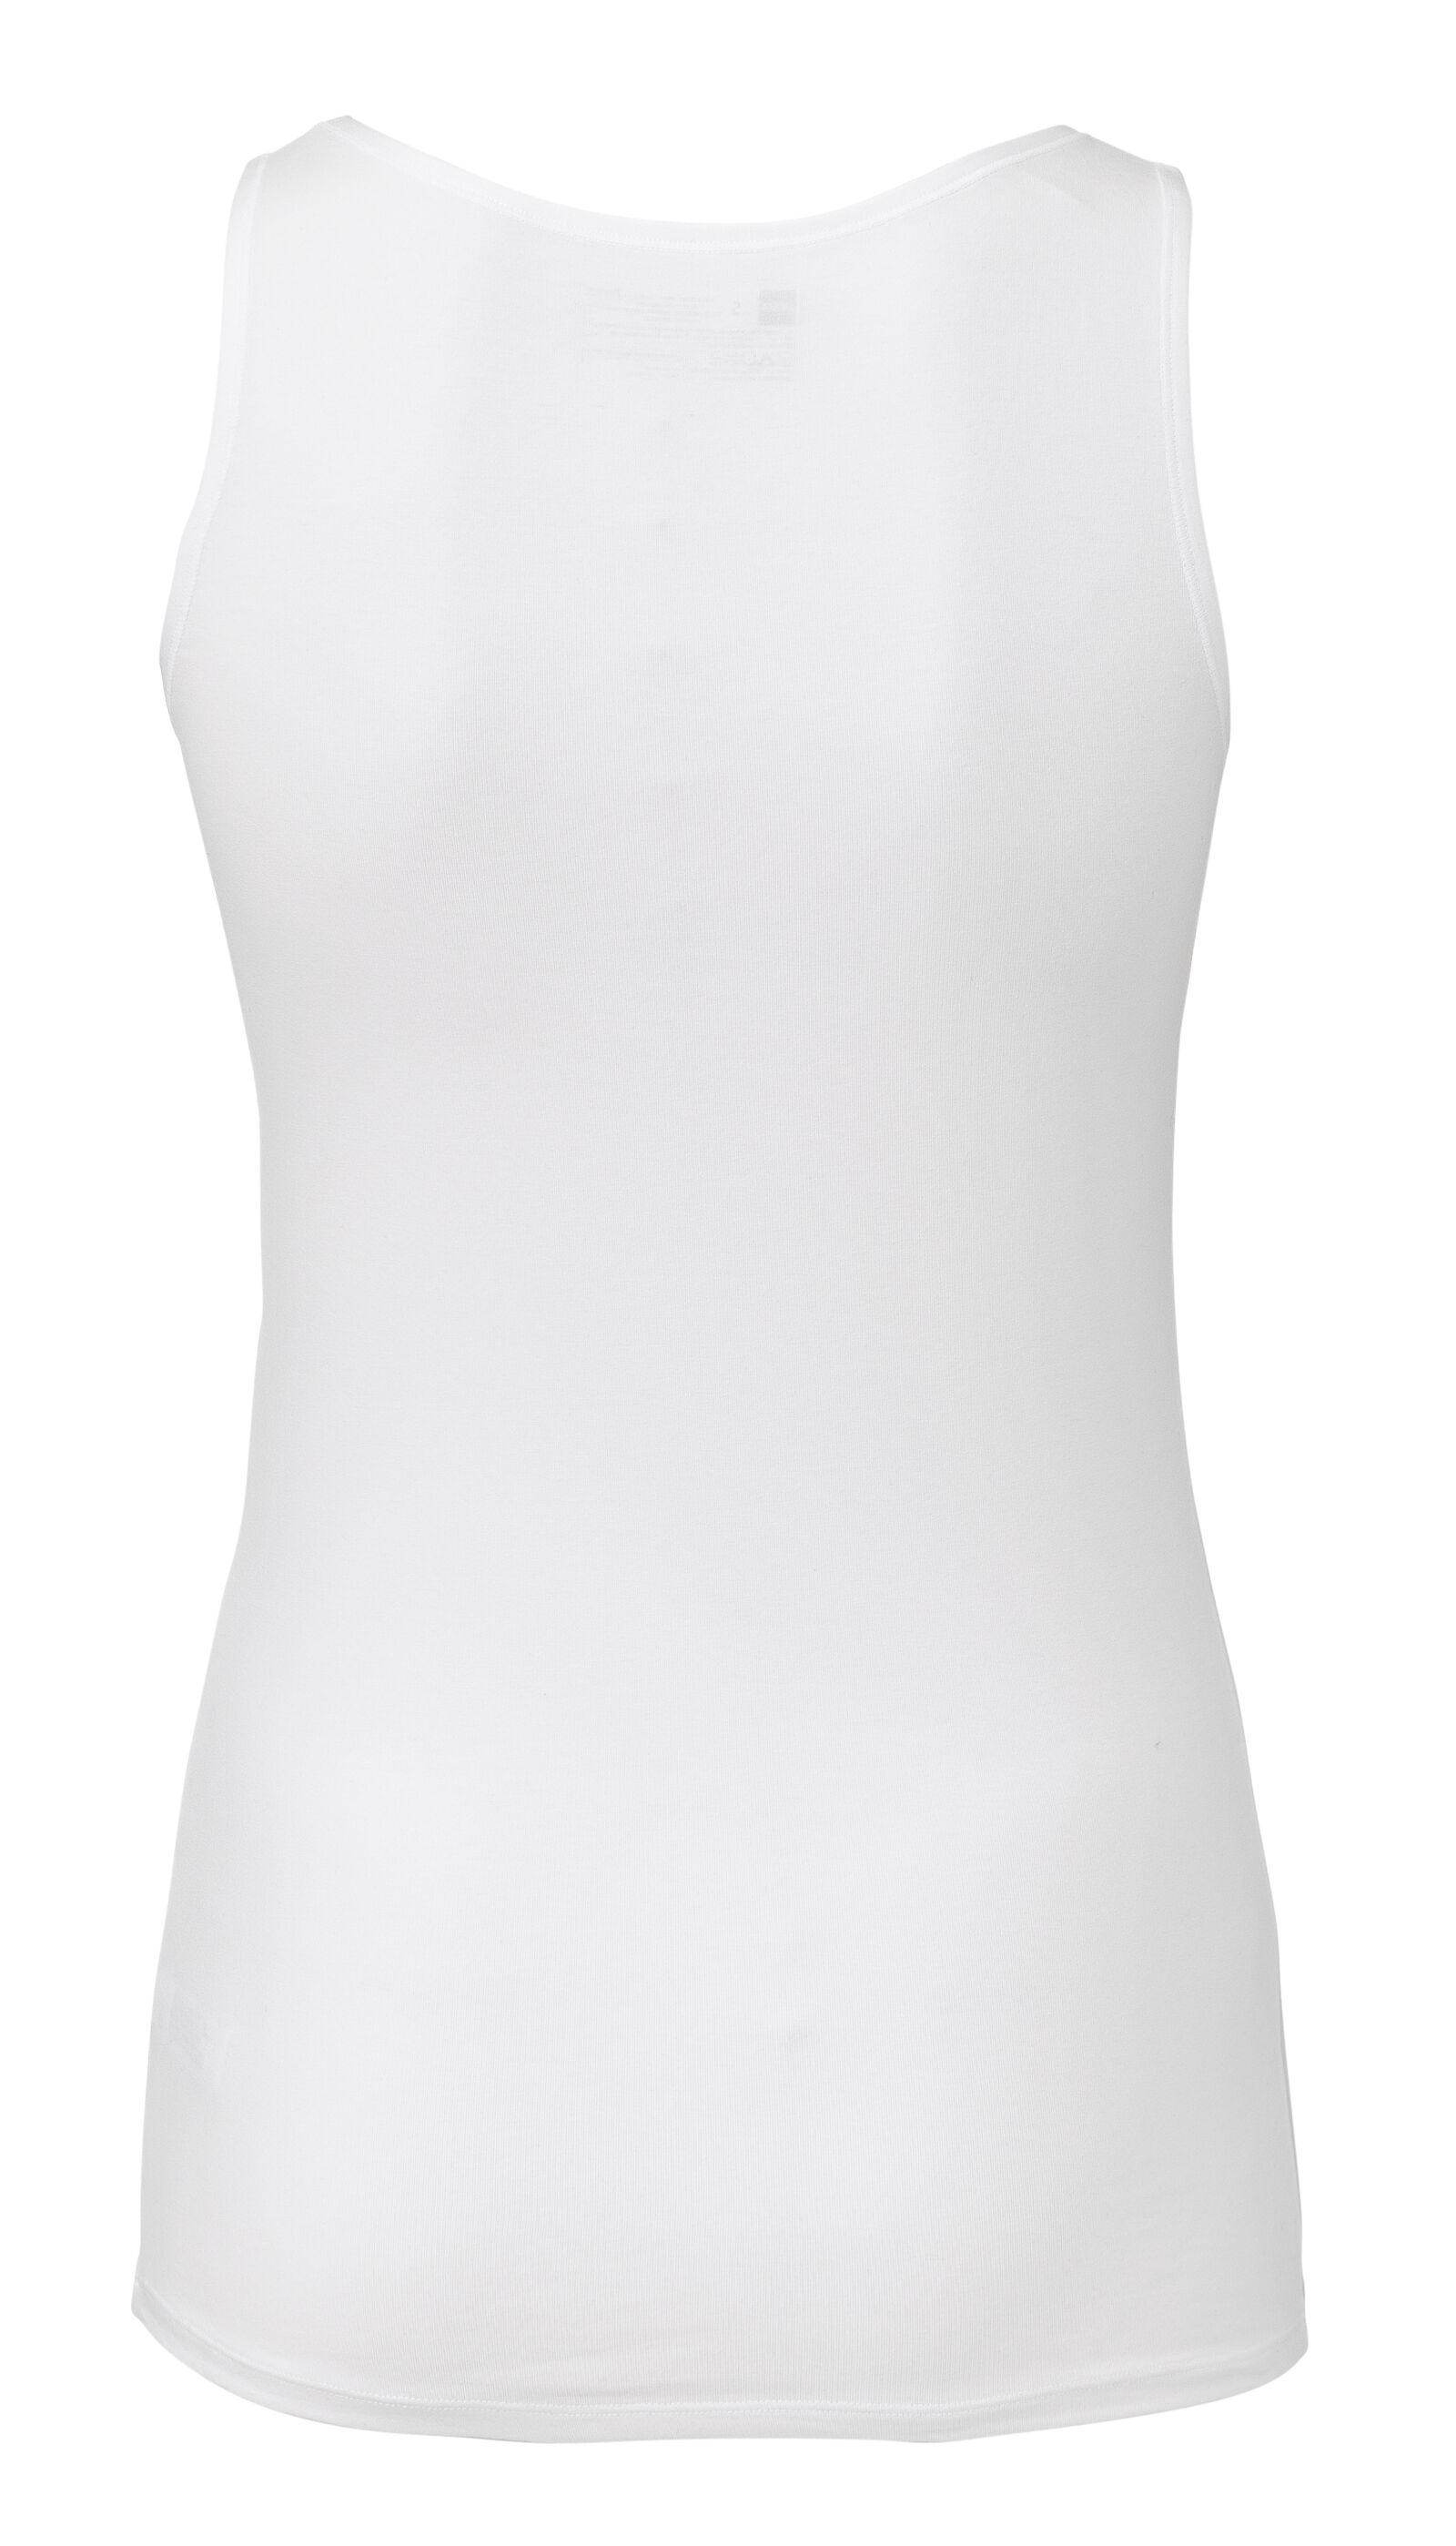 Damen-Hemd, Real Lasting Cotton weiß - 1000001947 - HEMA